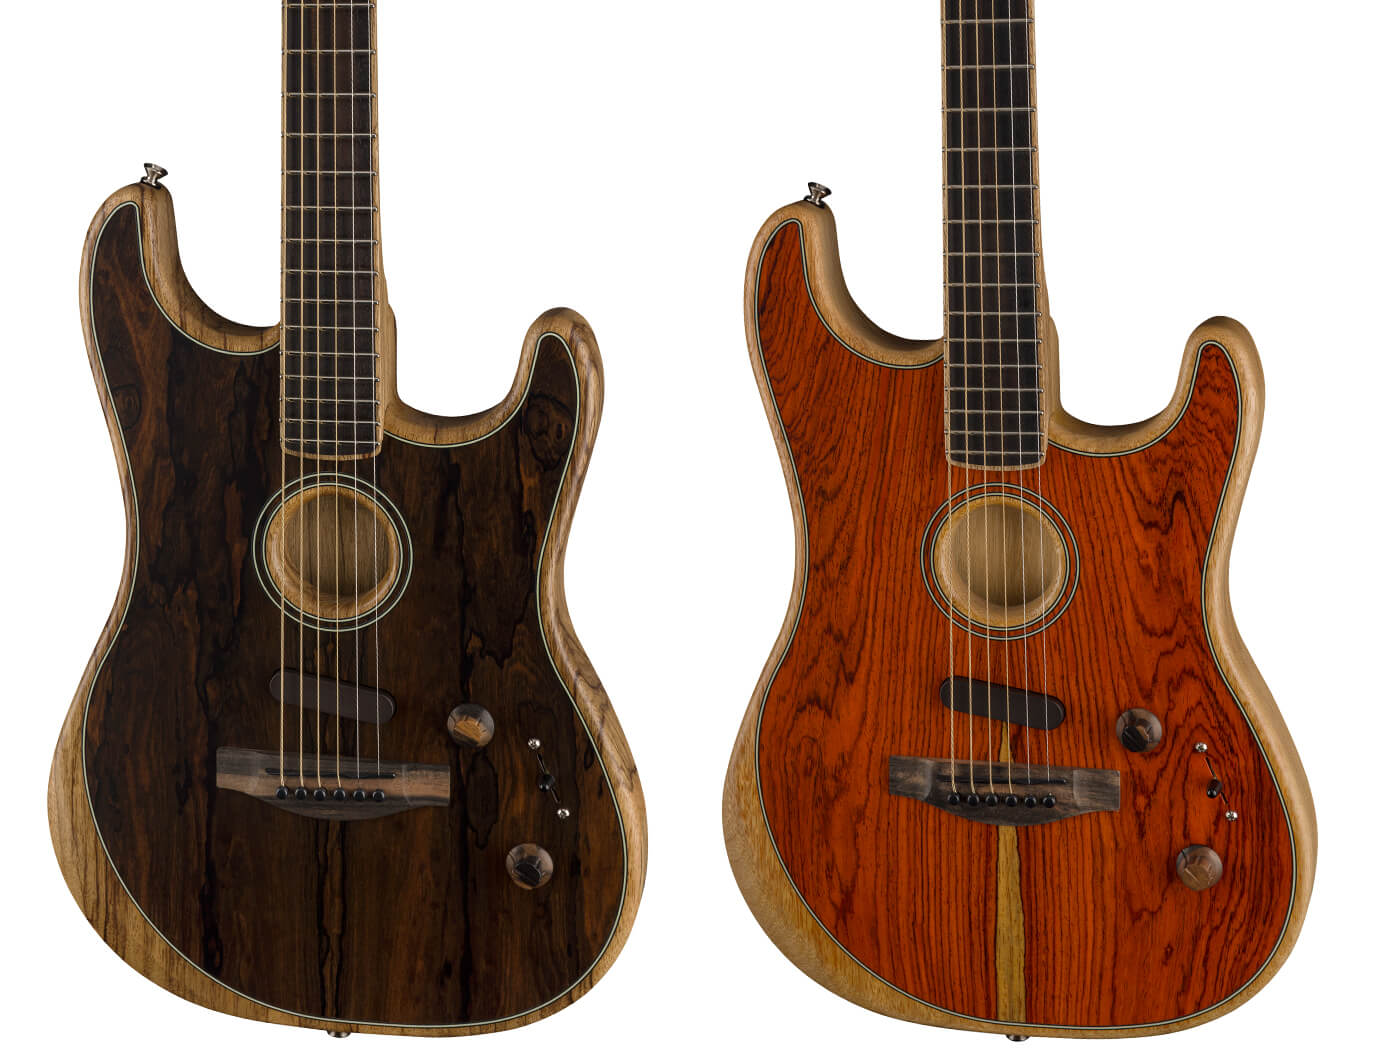 Fender Limited Edition Acoustasonic Stratocaster Ziricote and Cocobolo